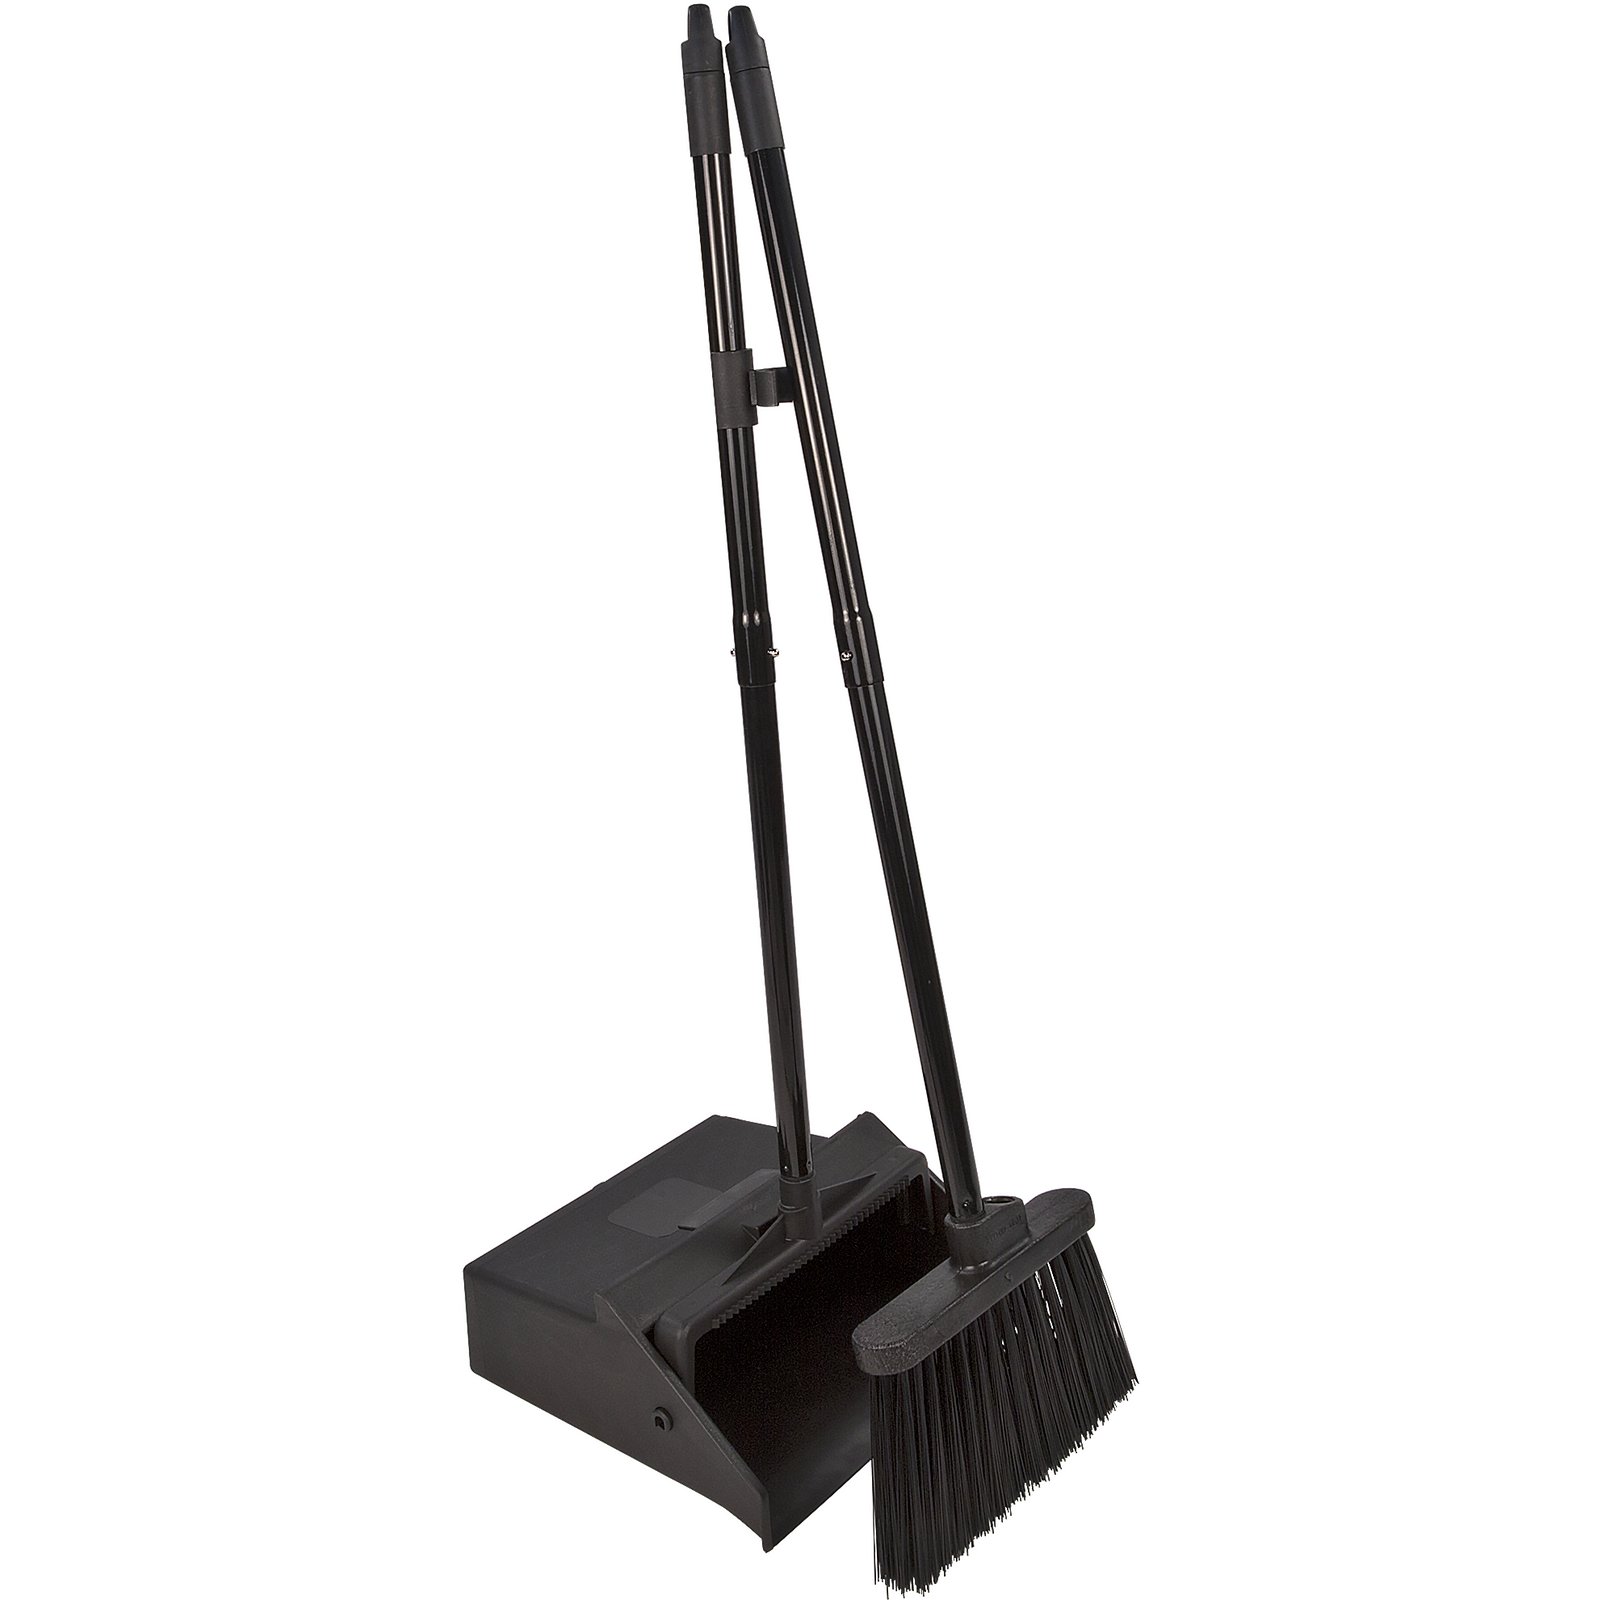 dustpan and broom